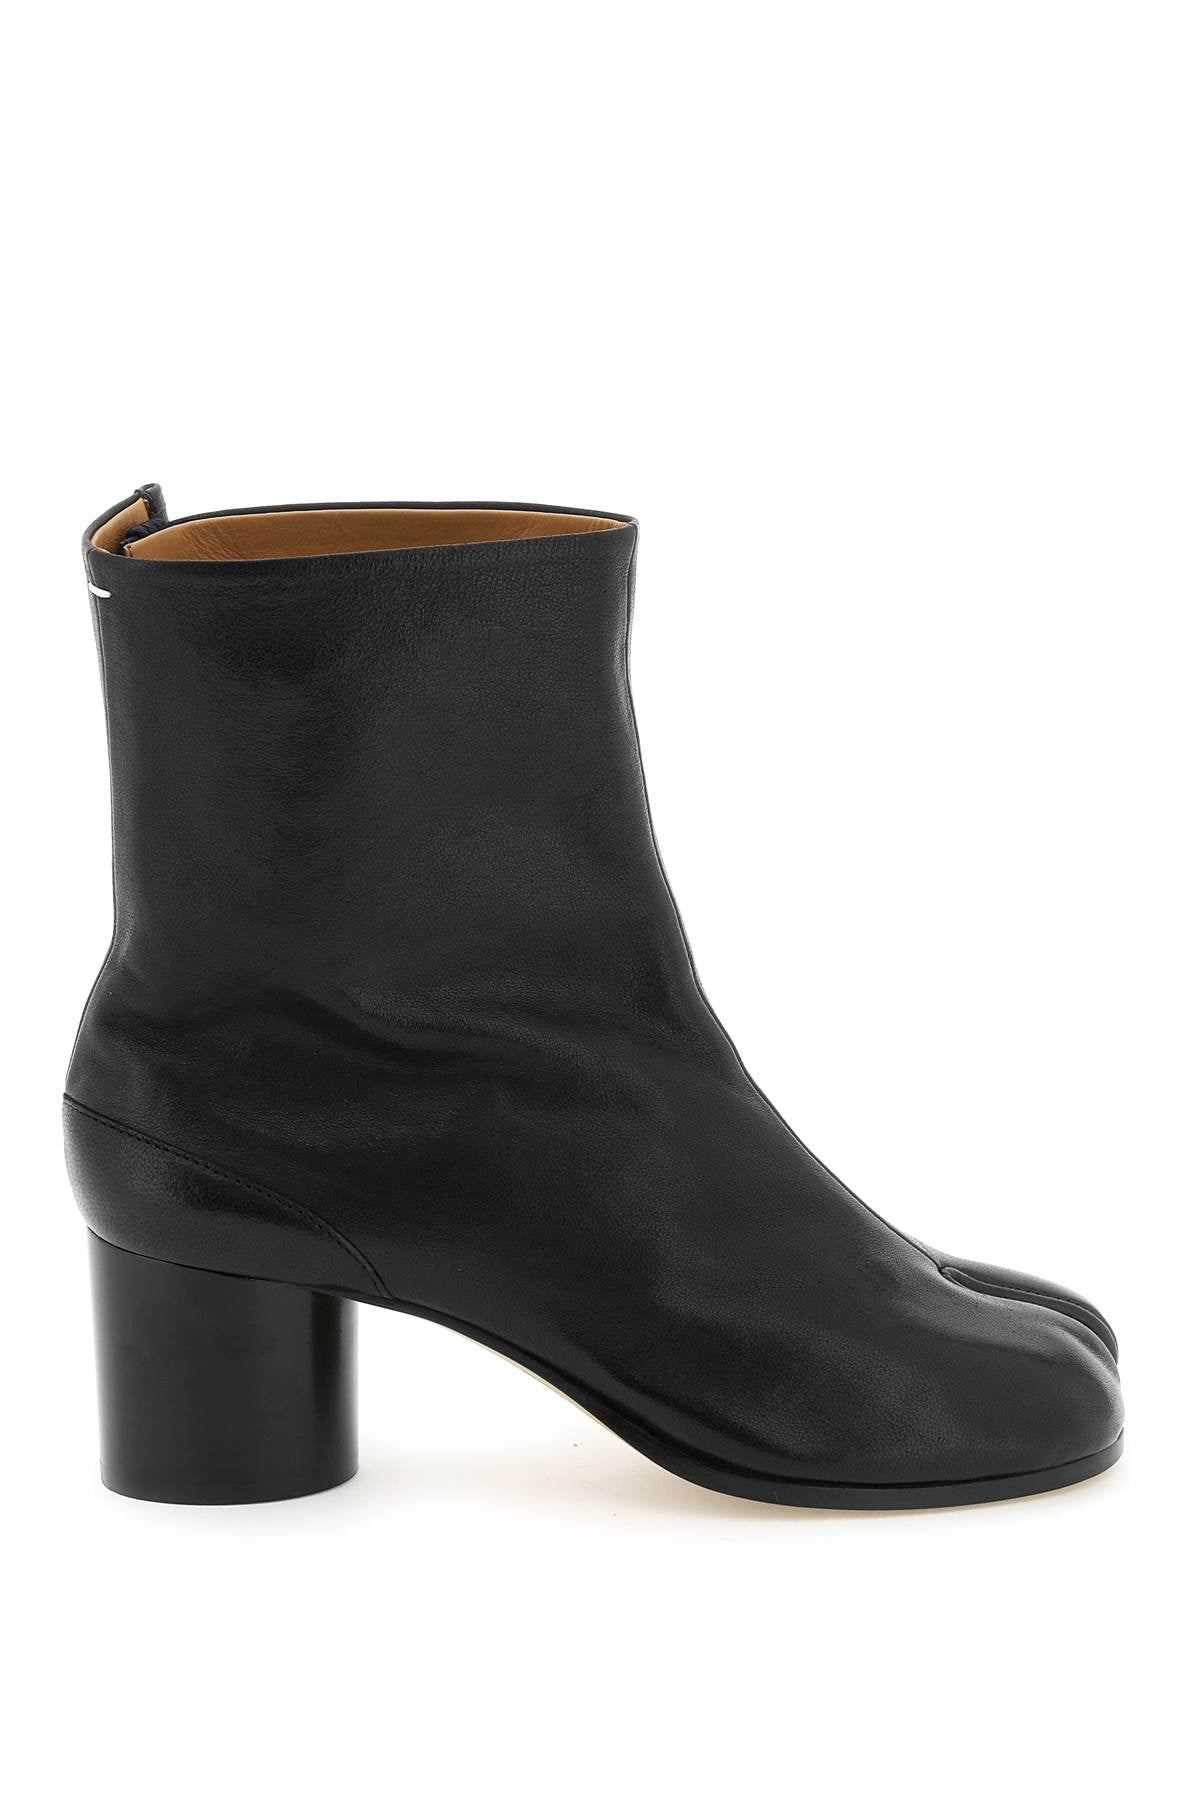 Maison margiela leather tabi ankle boots-0